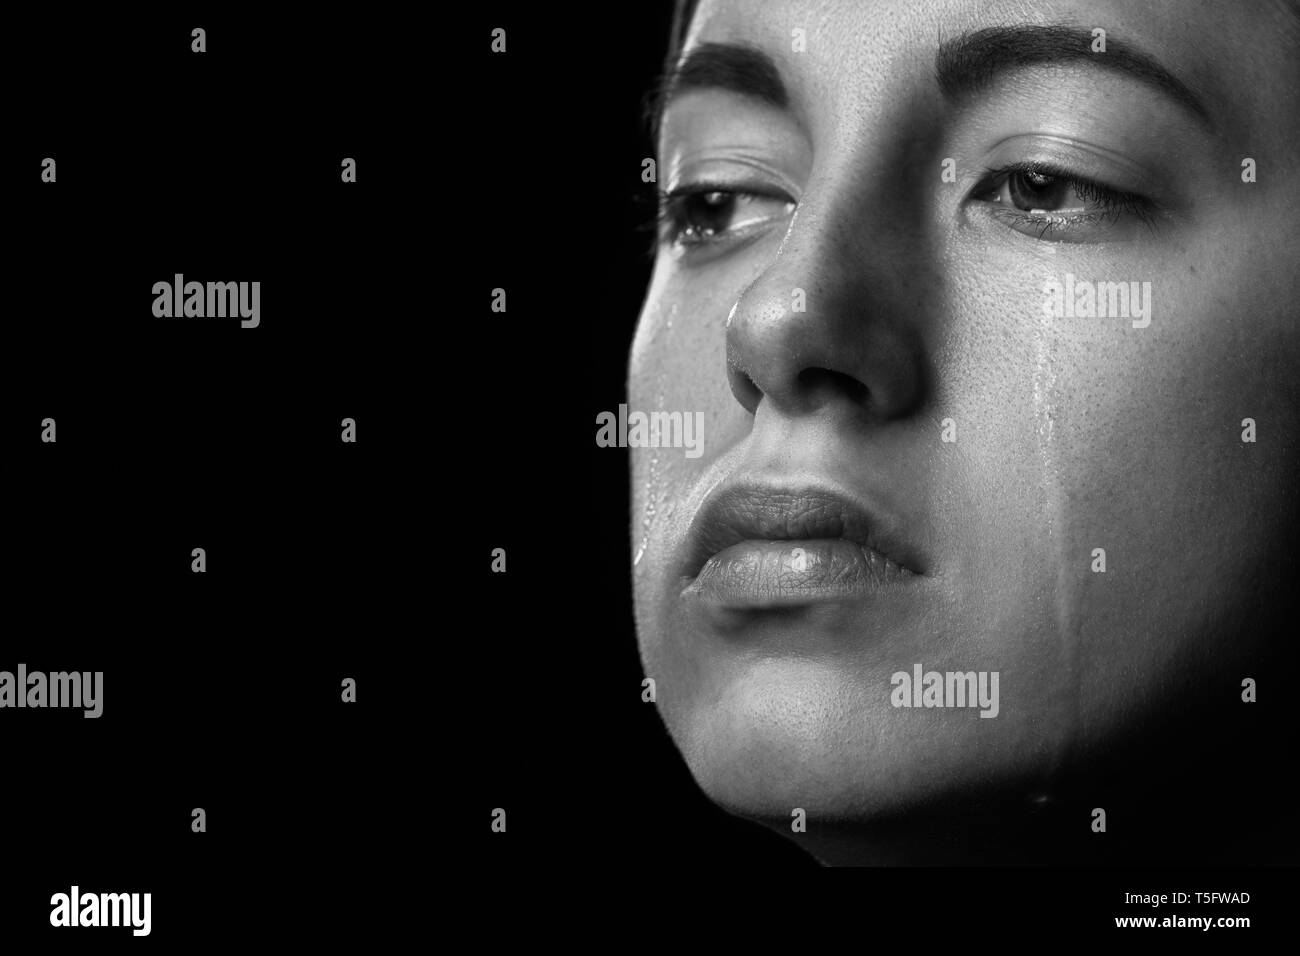 sad woman crying on black background, closeup portrait, monochrome Stock Photo